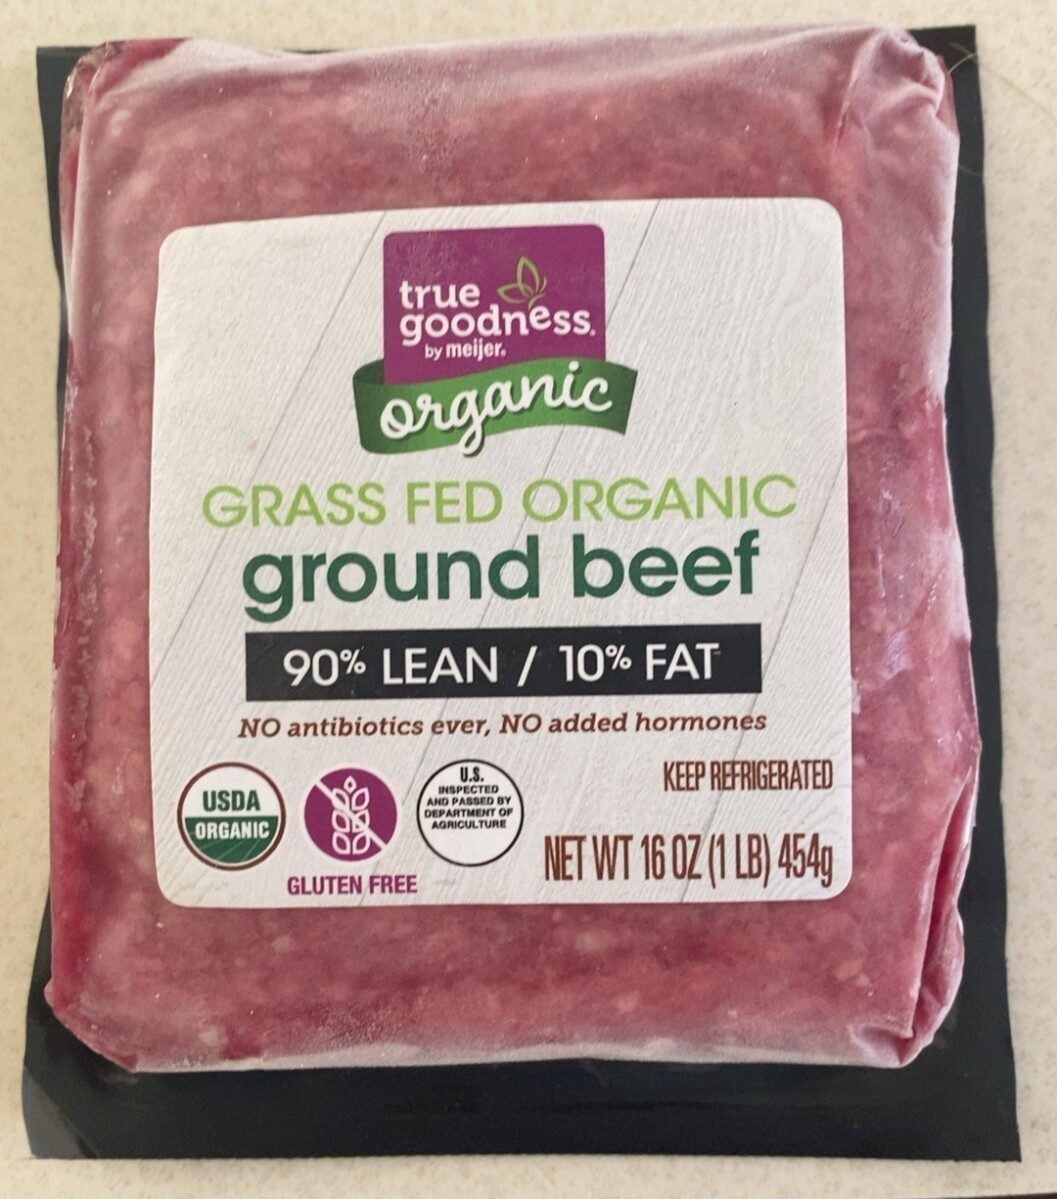 True Goodness organic ground beef - Product - en